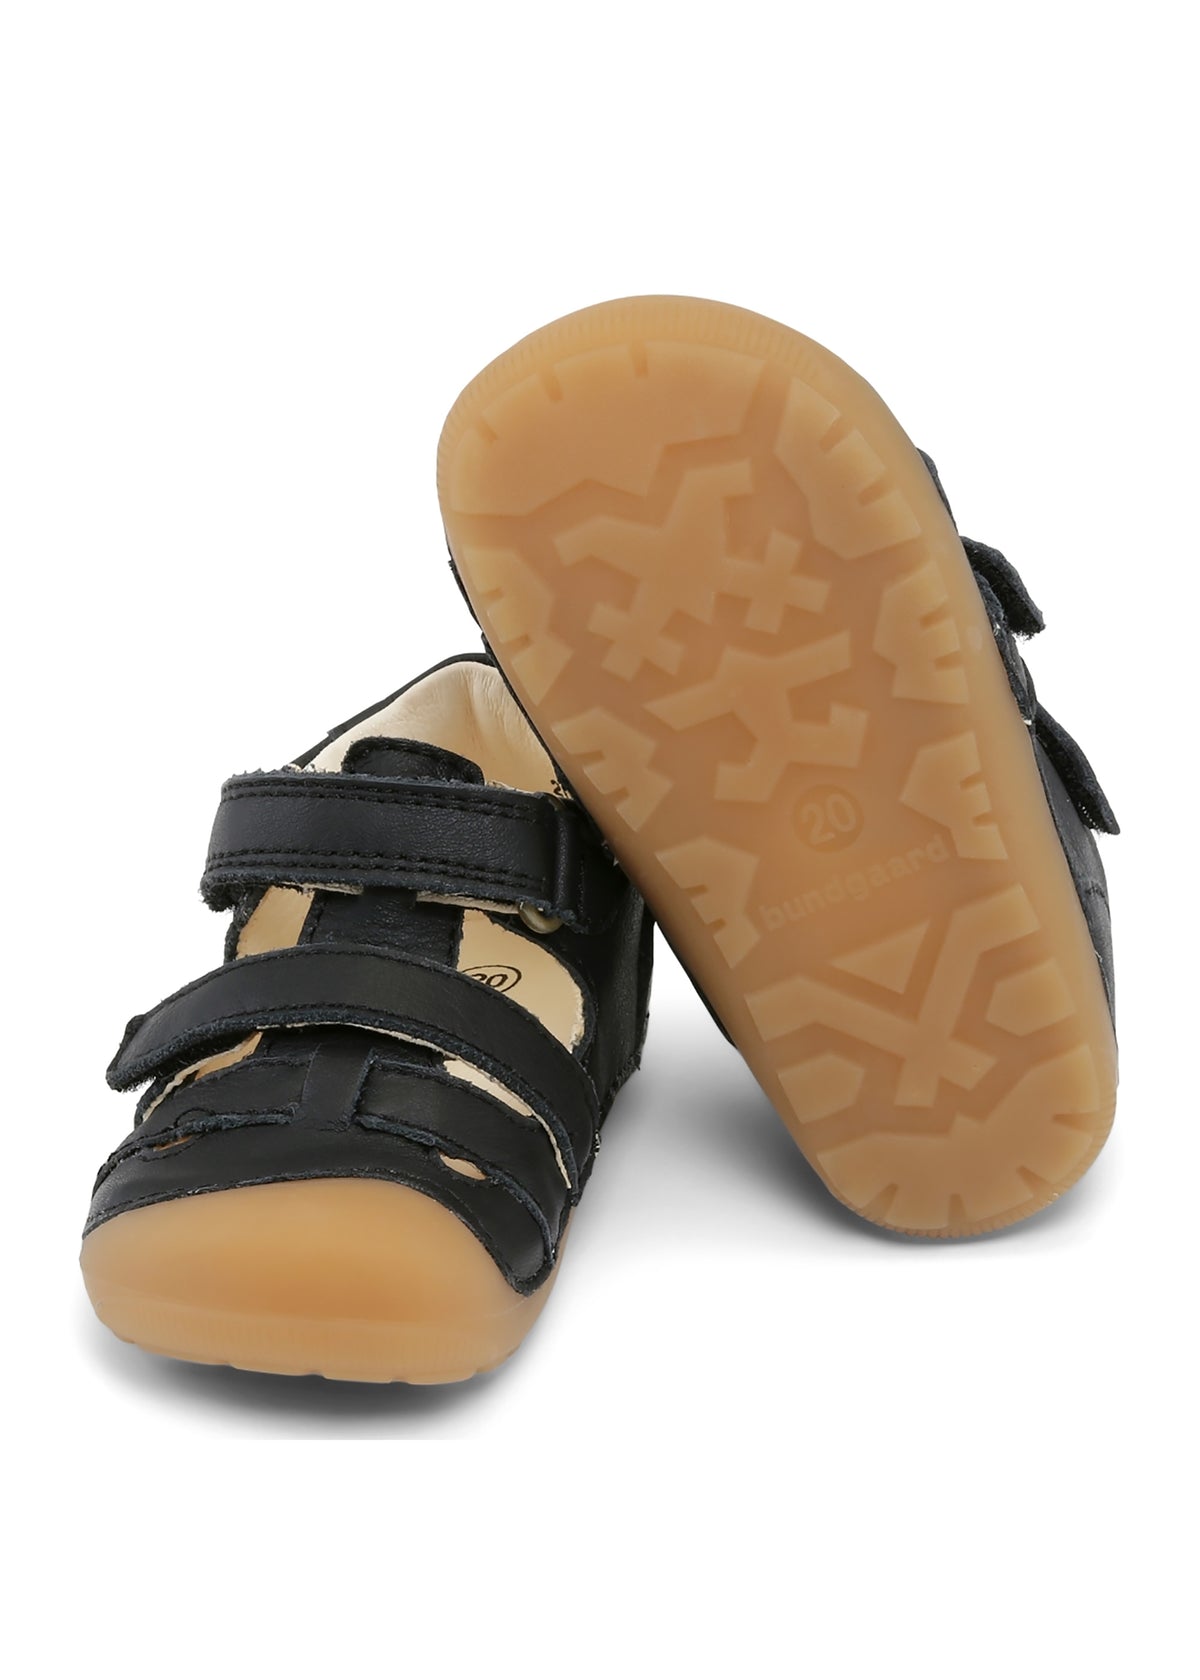 Children's sandals - Petit Sandal, black, closed toe, Bundgaard Zero Heel